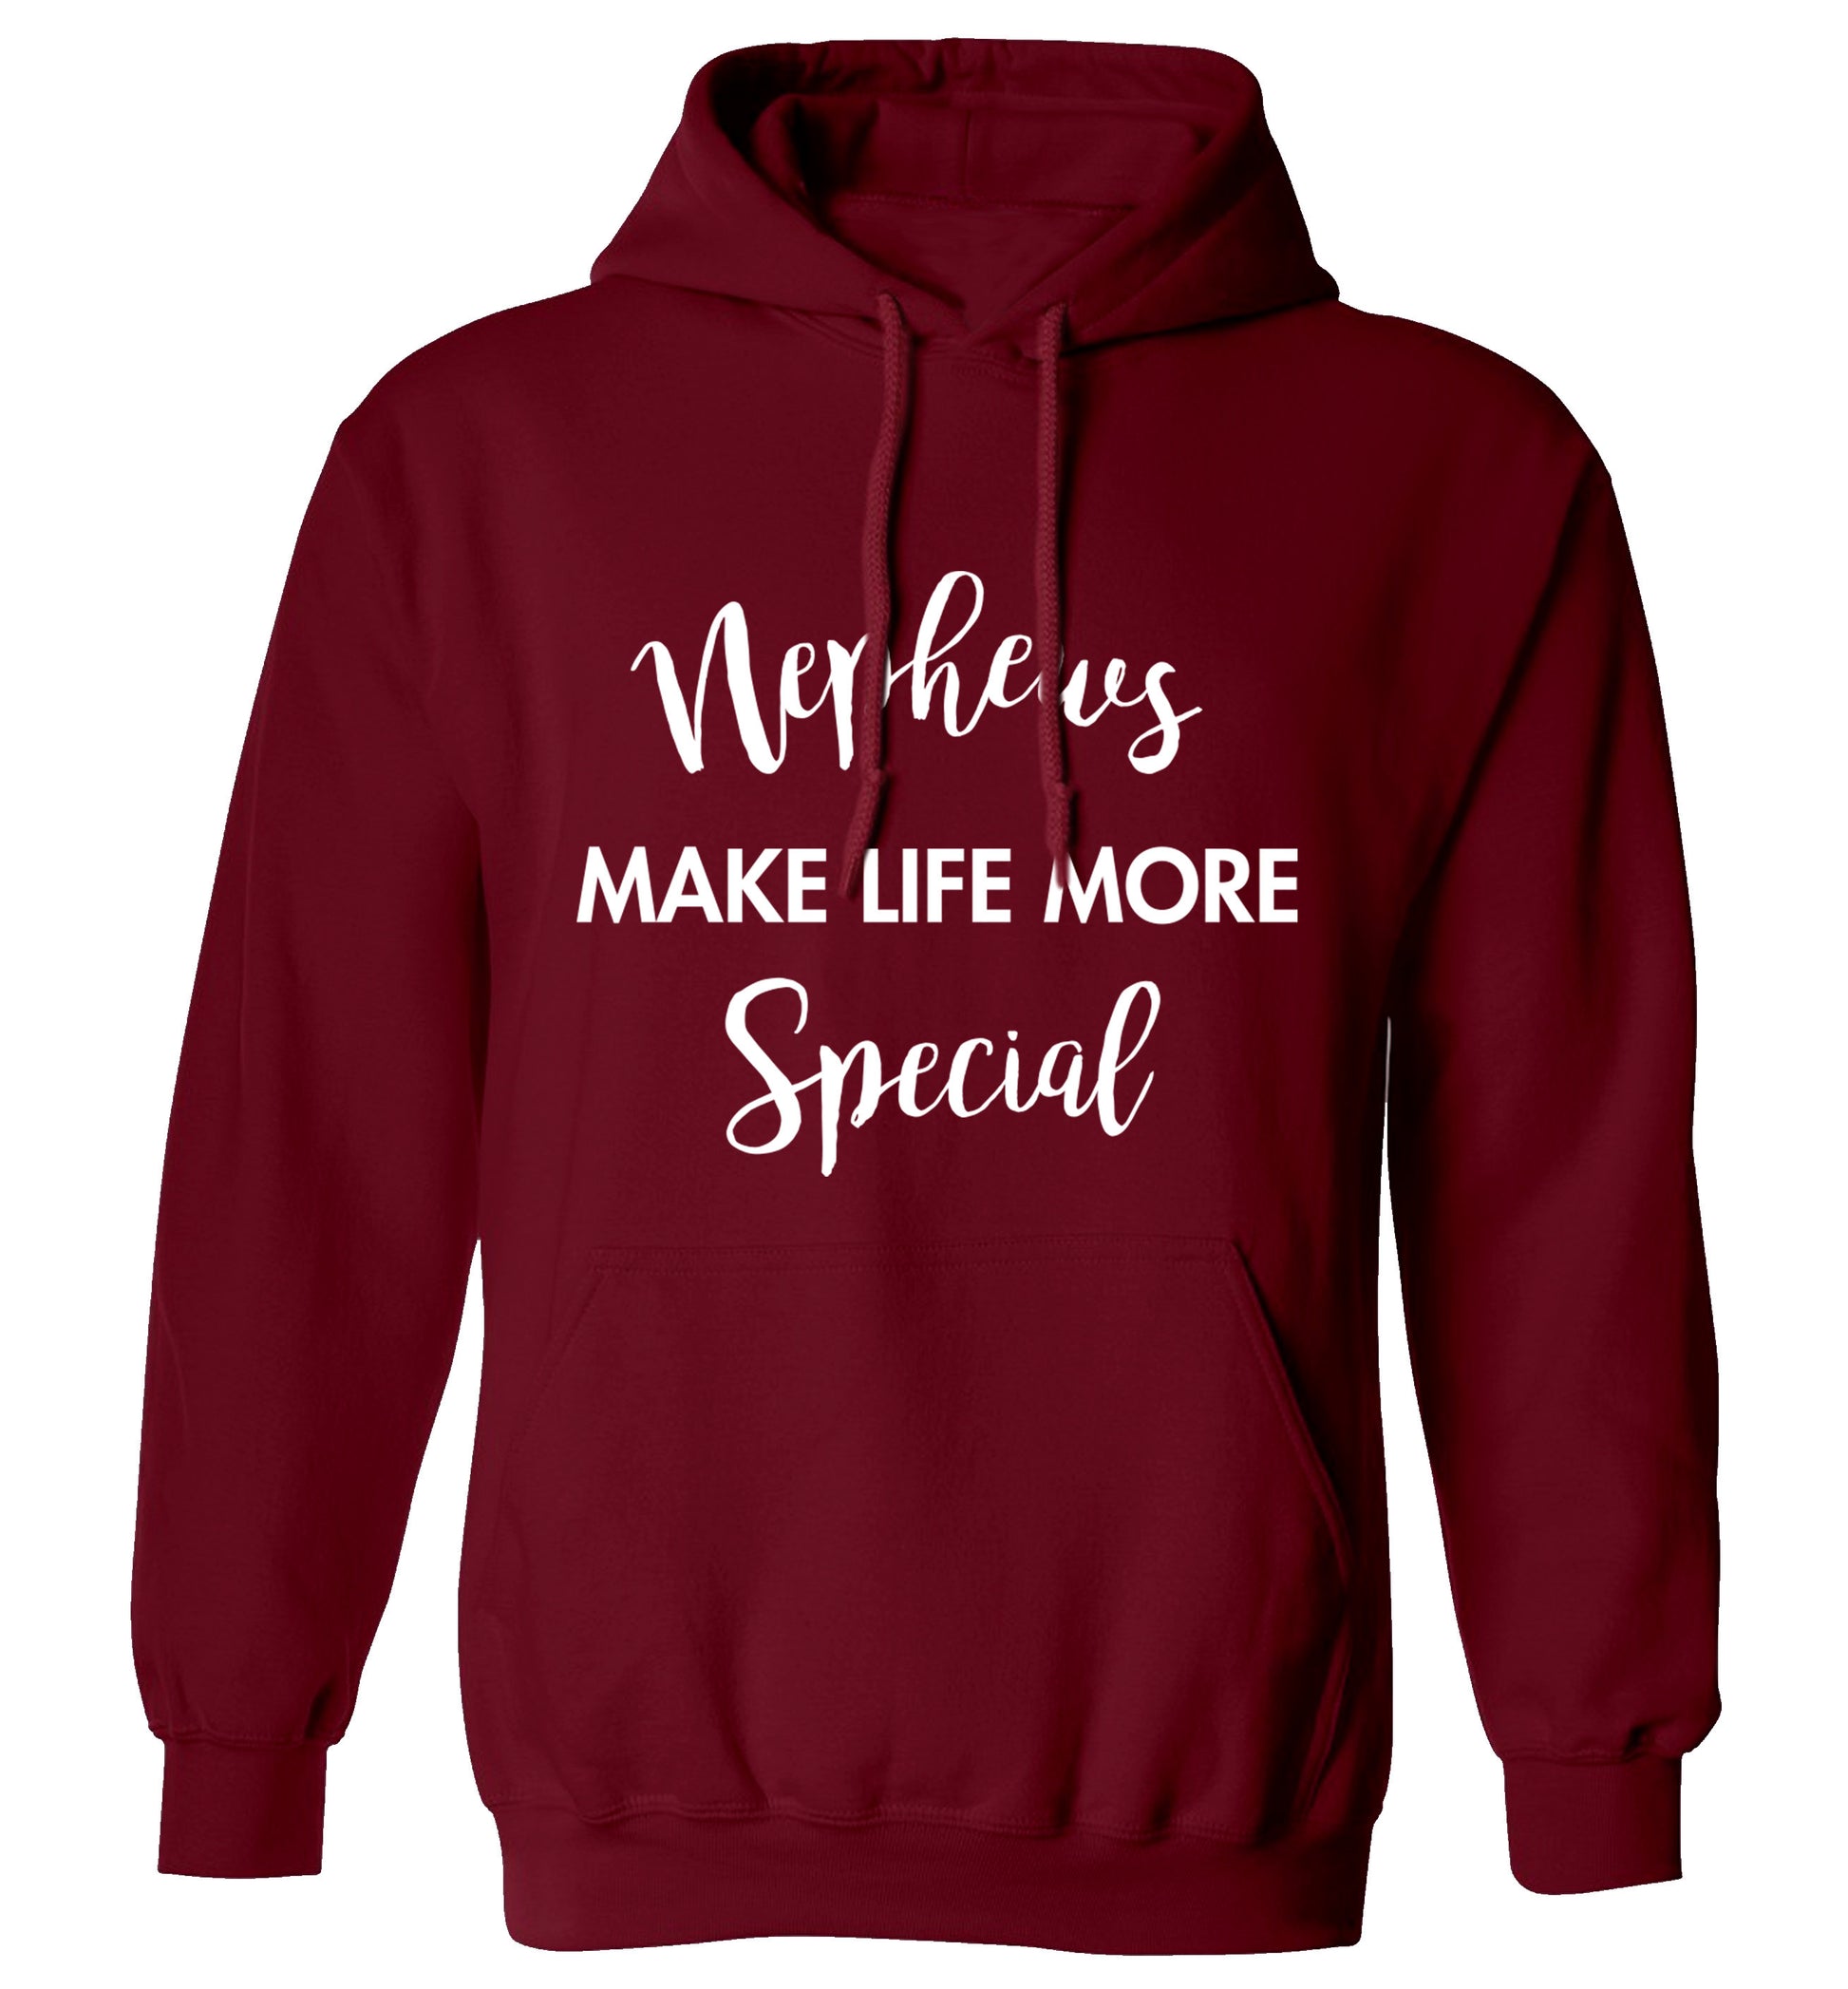 Nephews make life more special adults unisex maroon hoodie 2XL